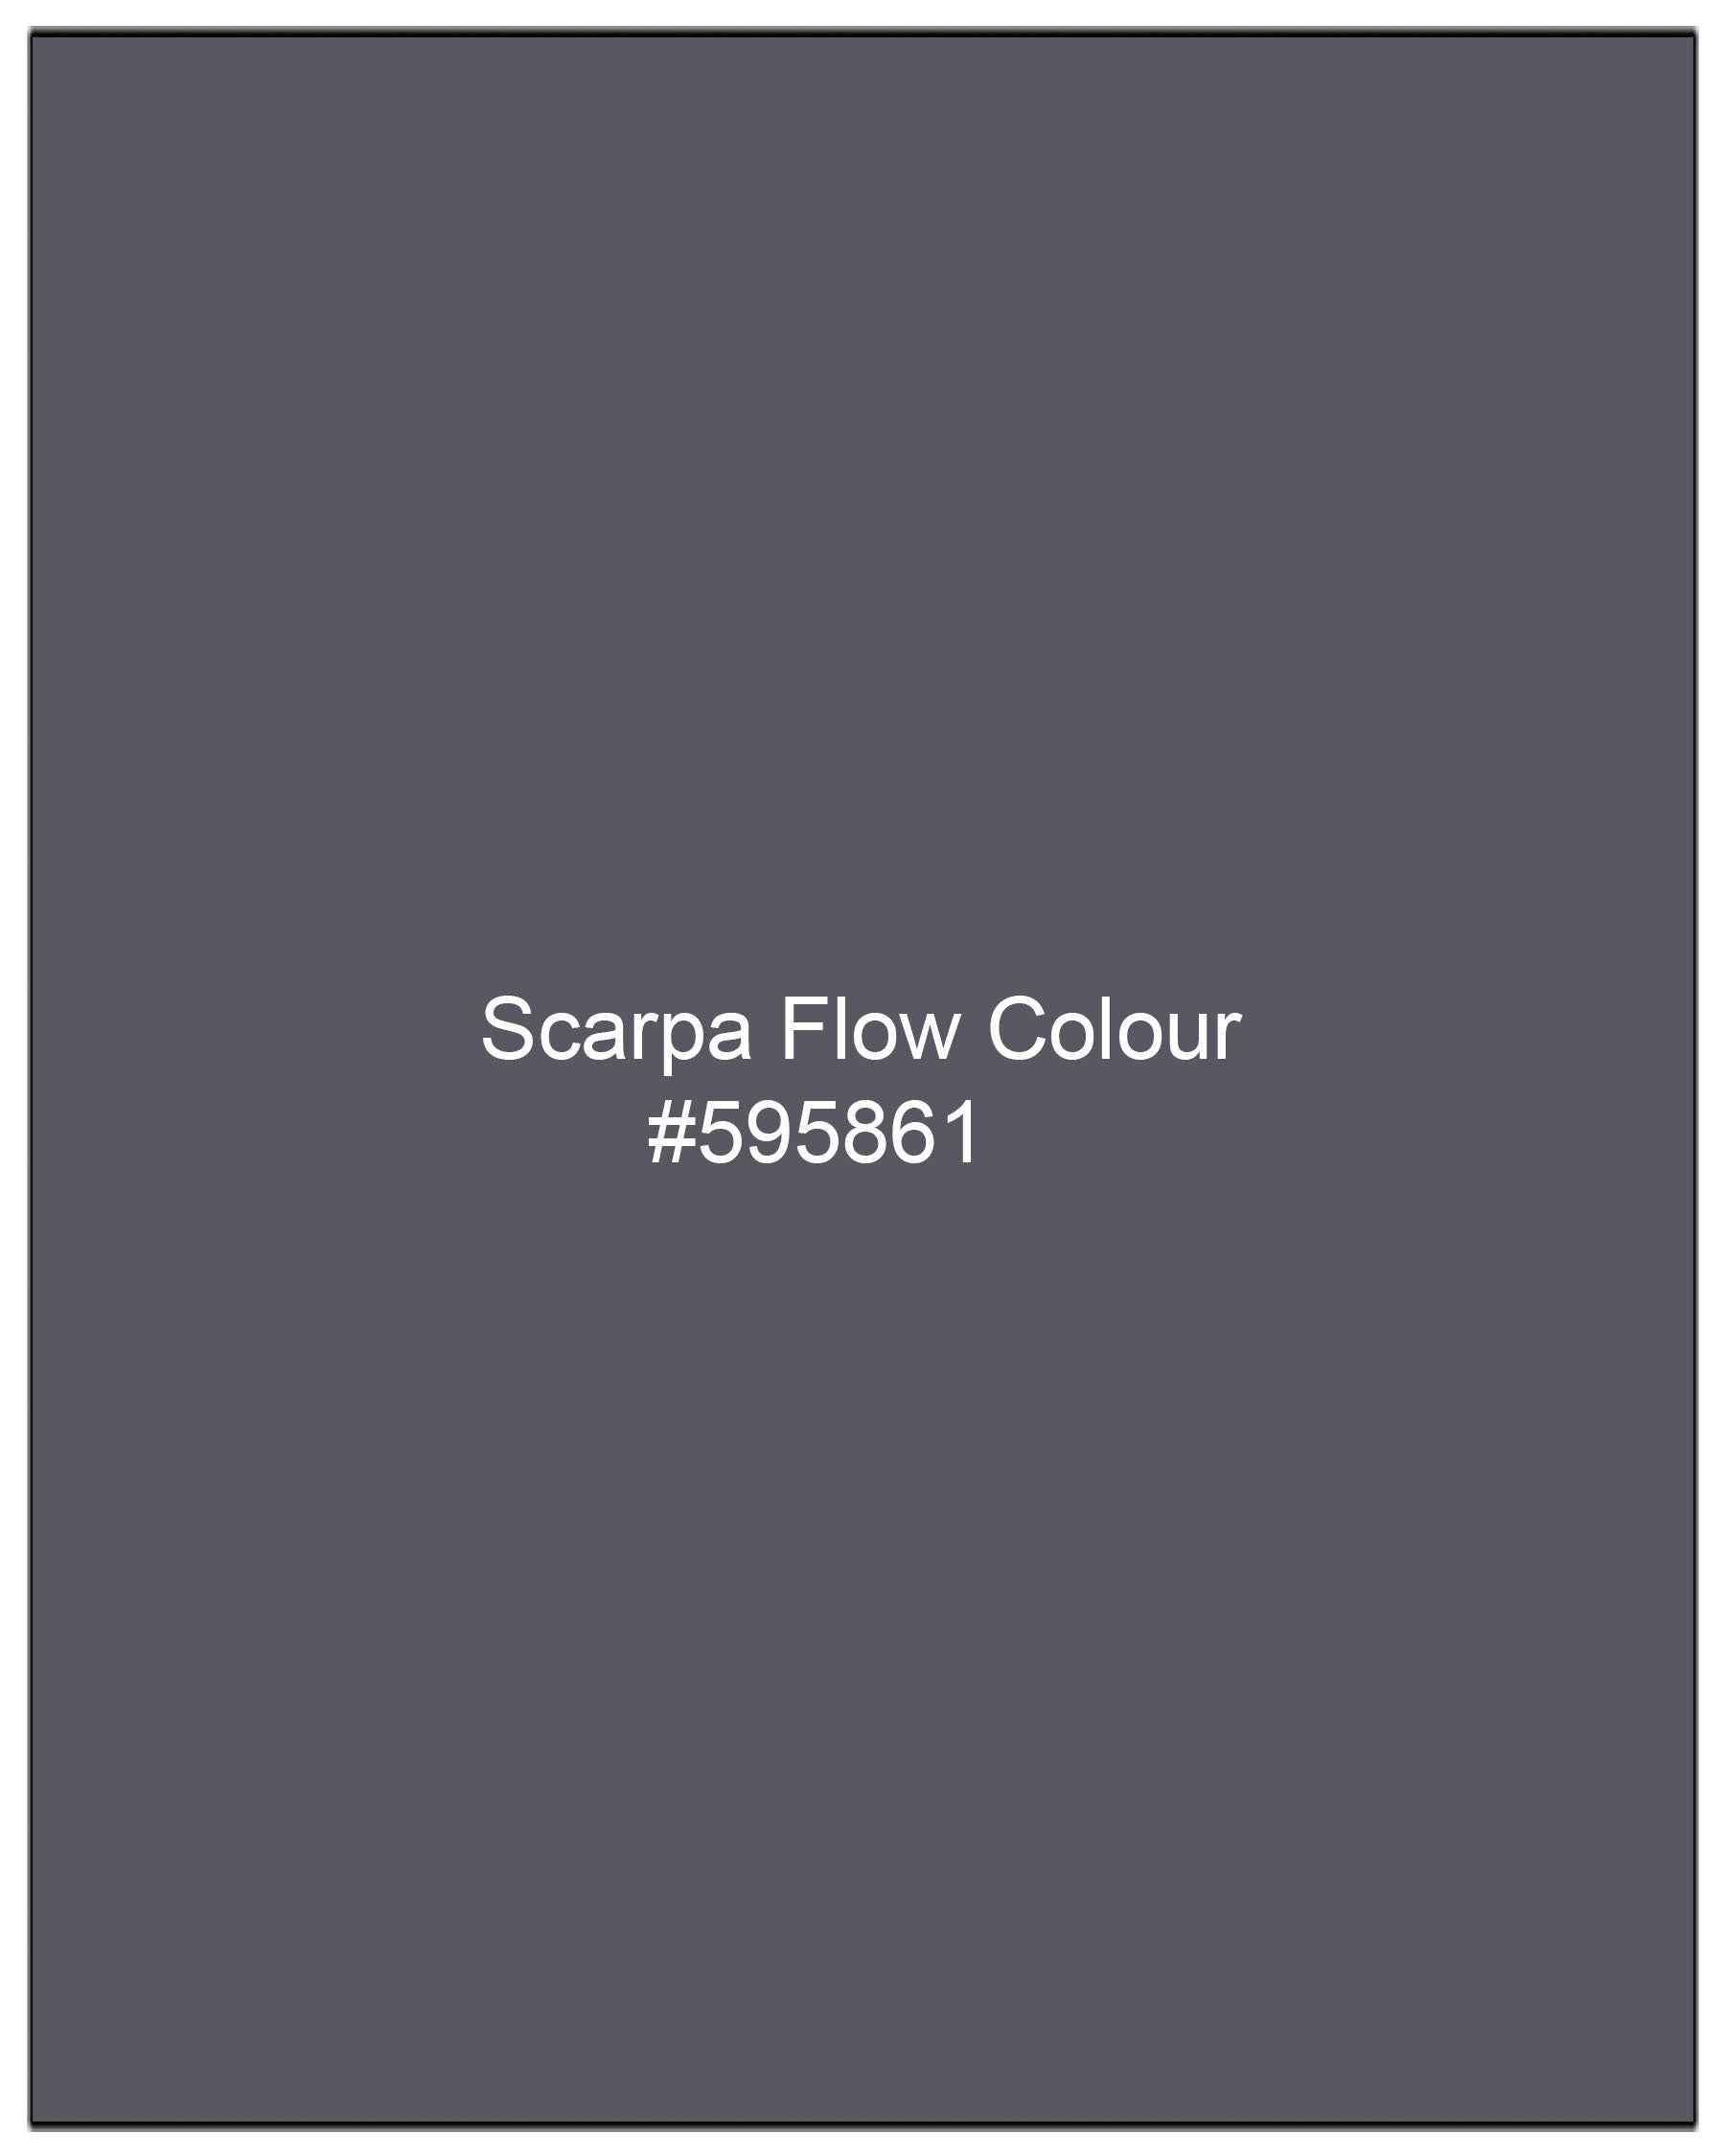 Scarpa Flow Gray Textured Waistcoat V1979-36, V1979-38, V1979-40, V1979-42, V1979-44, V1979-46, V1979-48, V1979-50, V1979-52, V1979-54, V1979-56, V1979-58, V1979-60